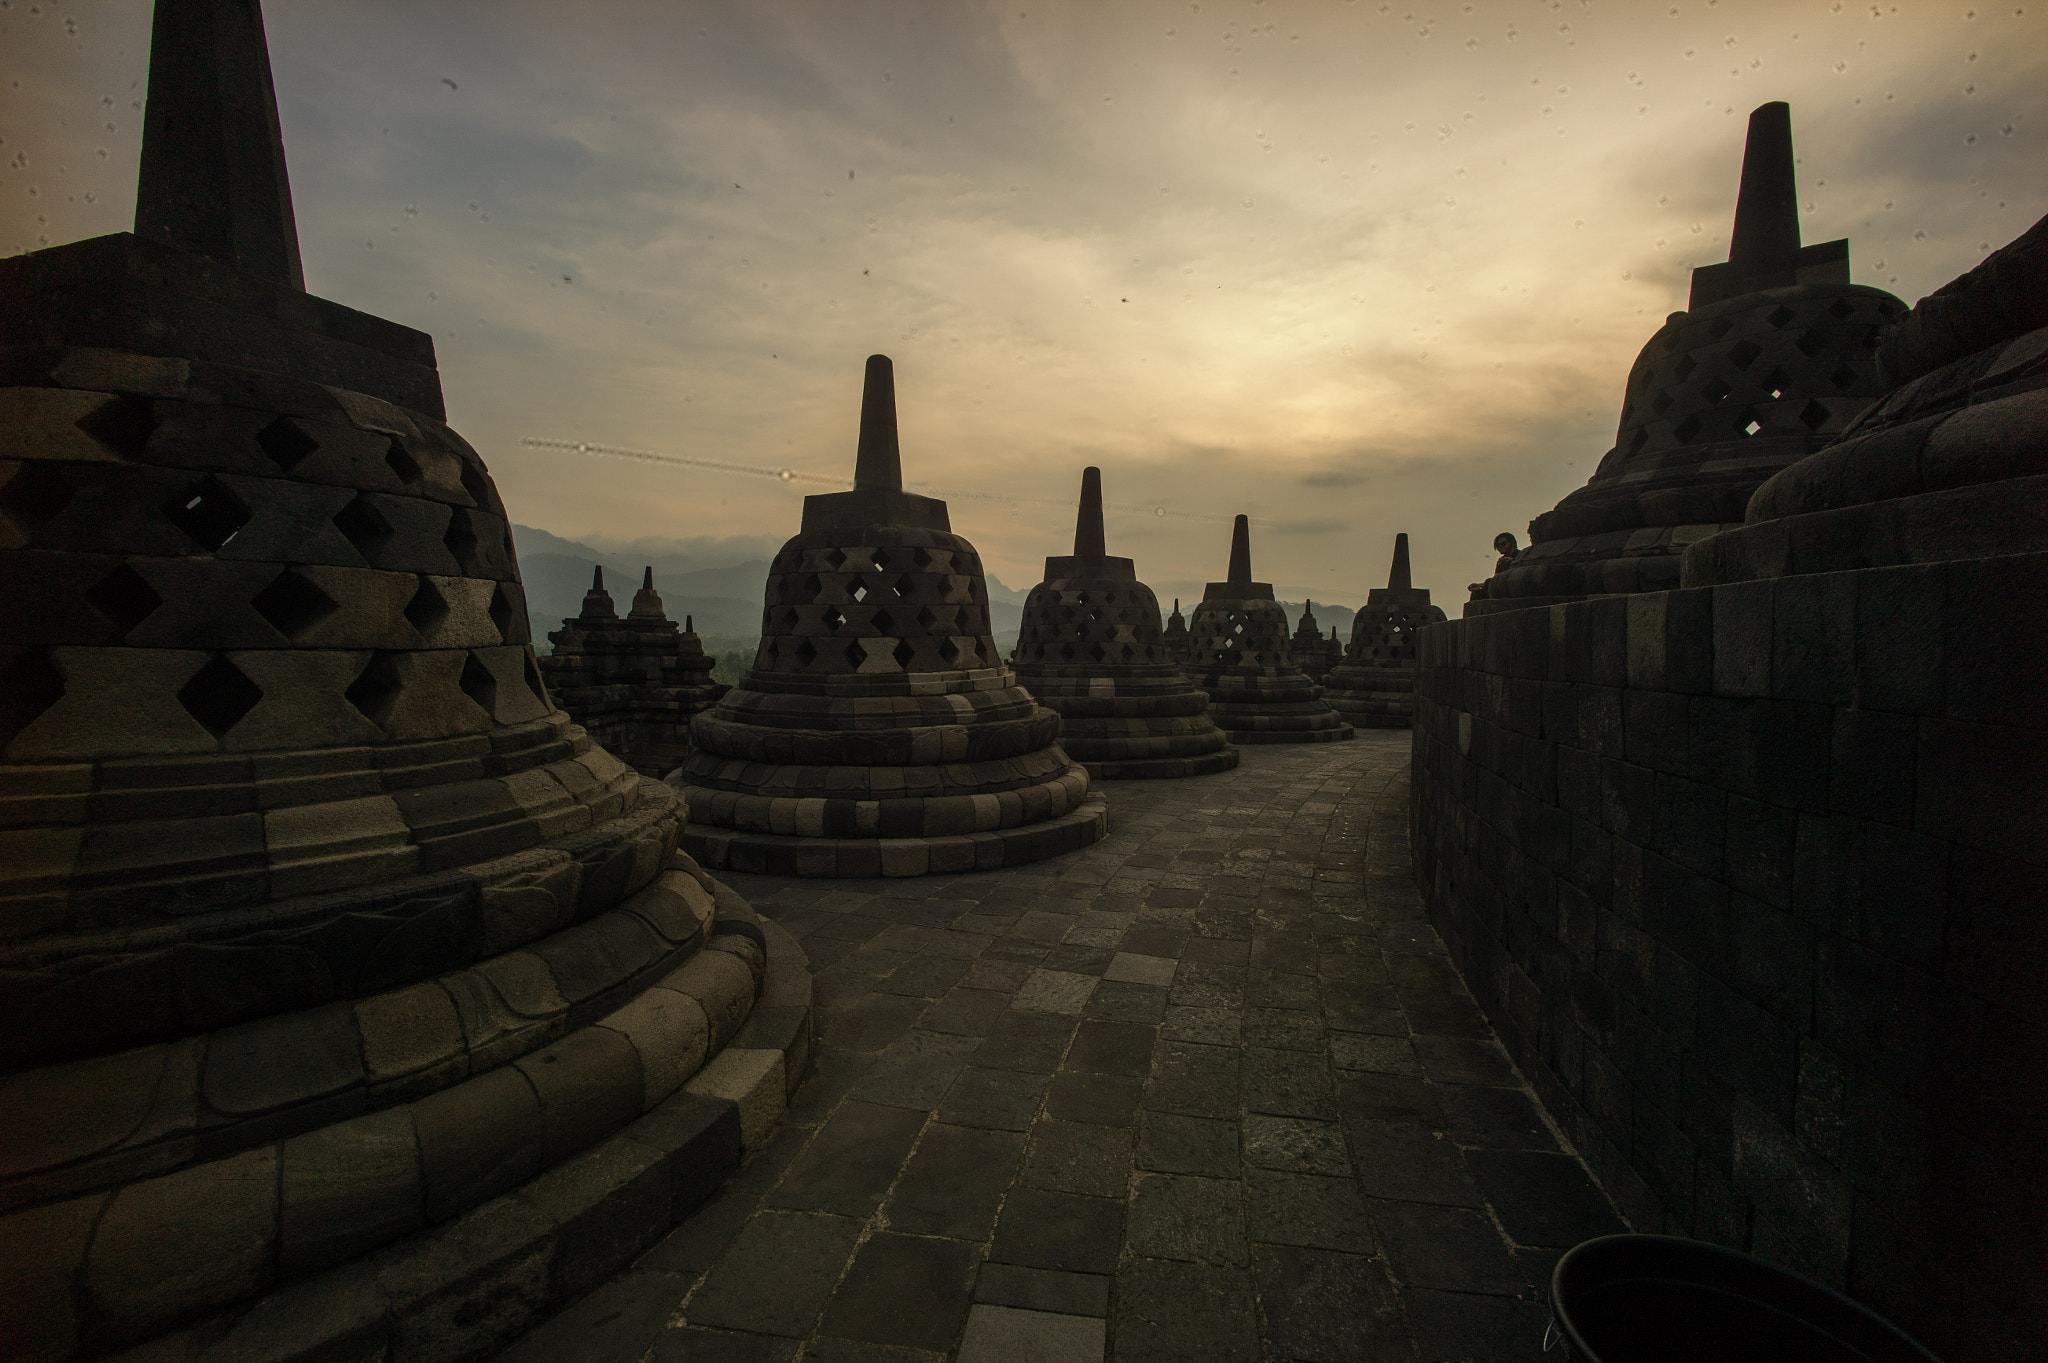 Elmarit-M 21mm f/2.8 sample photo. Borobudur temple photography